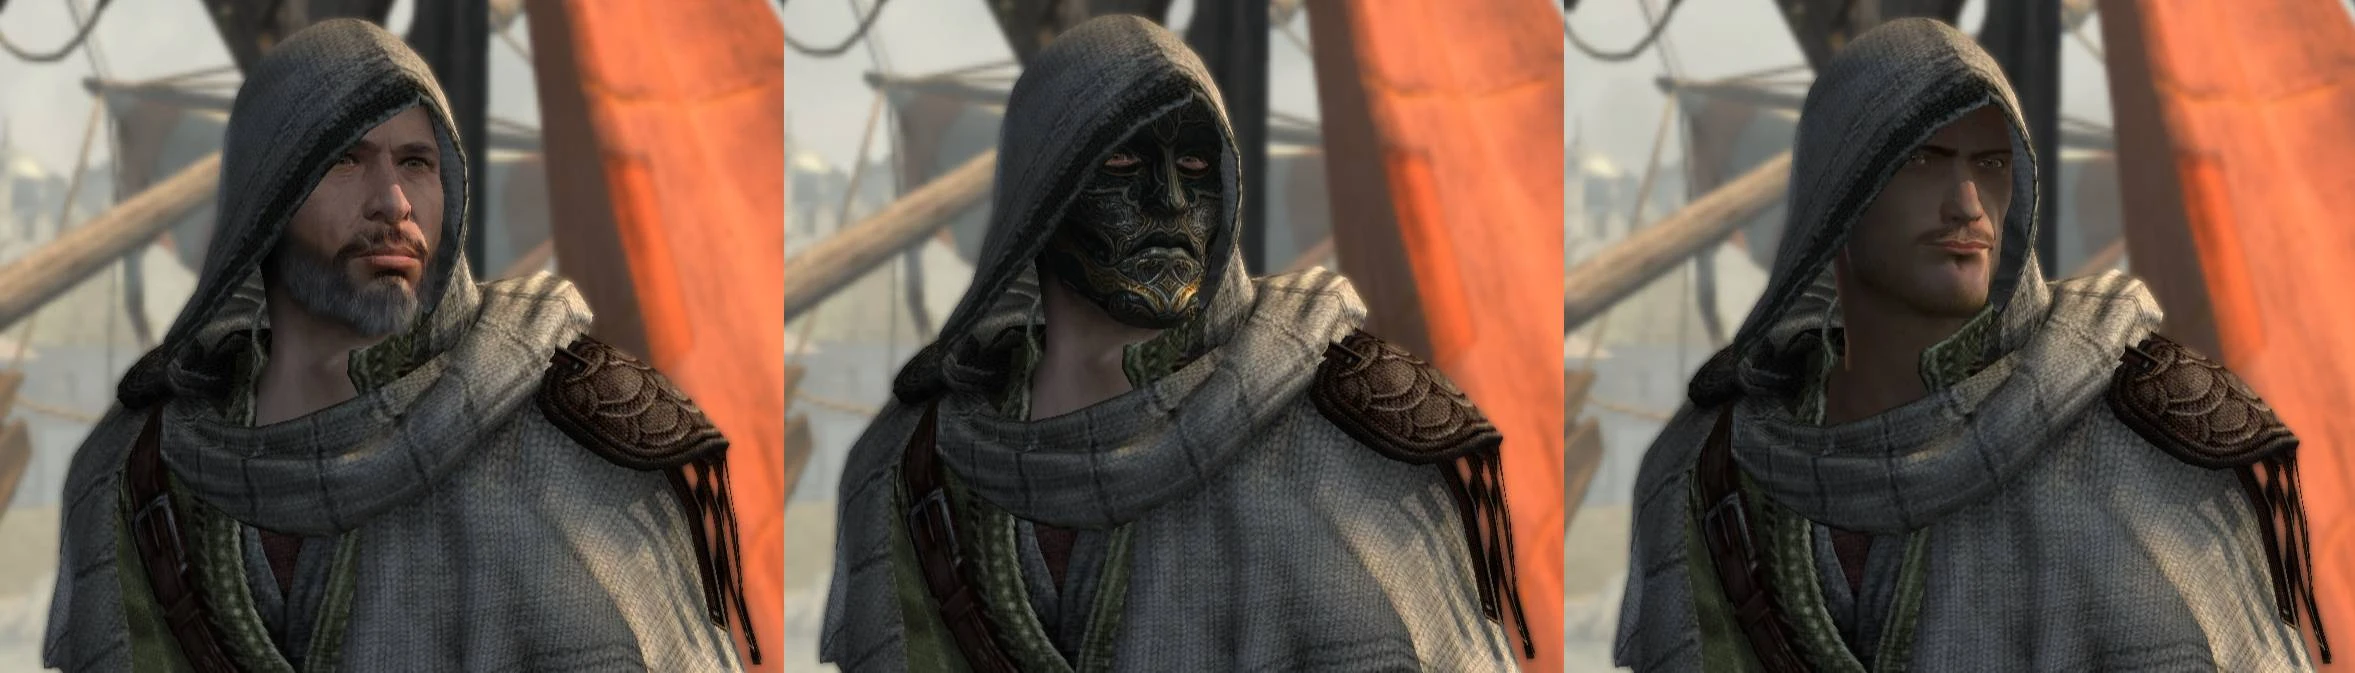 Assassin's Creed Revelations Walkthrough Part 25 - The Sentinel